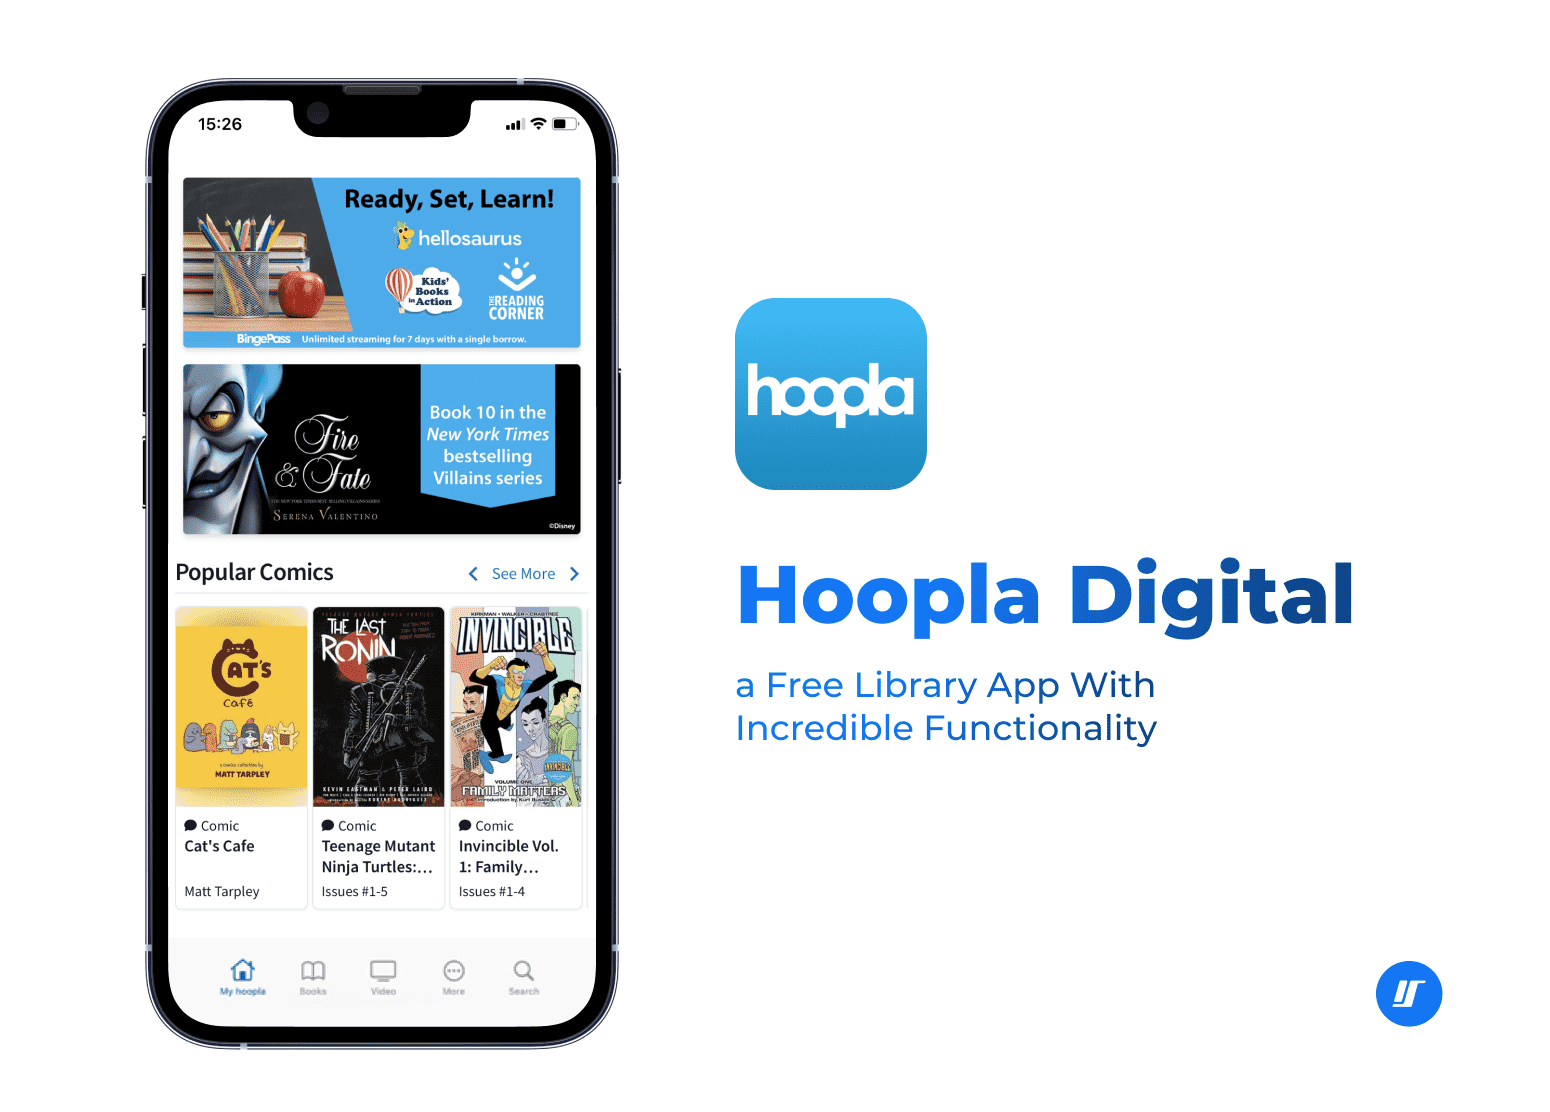 Hoopla Digital app screenshot on the iPhone screen